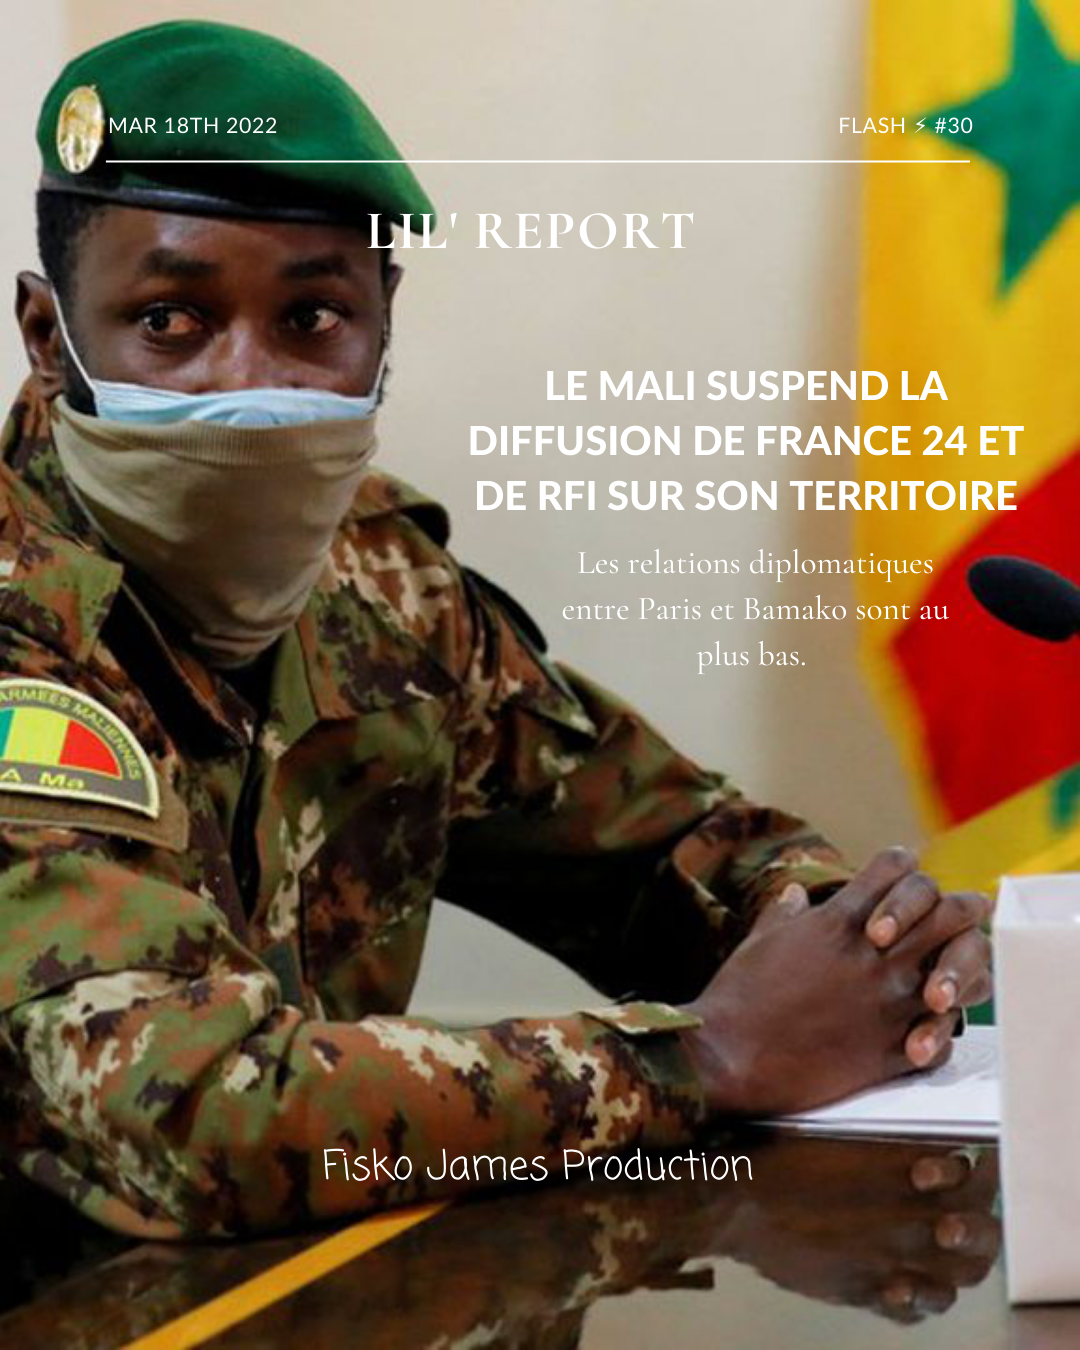 Le Mali suspend la diffusion de France 24 et de RFI sur son territoire (Fisko James)